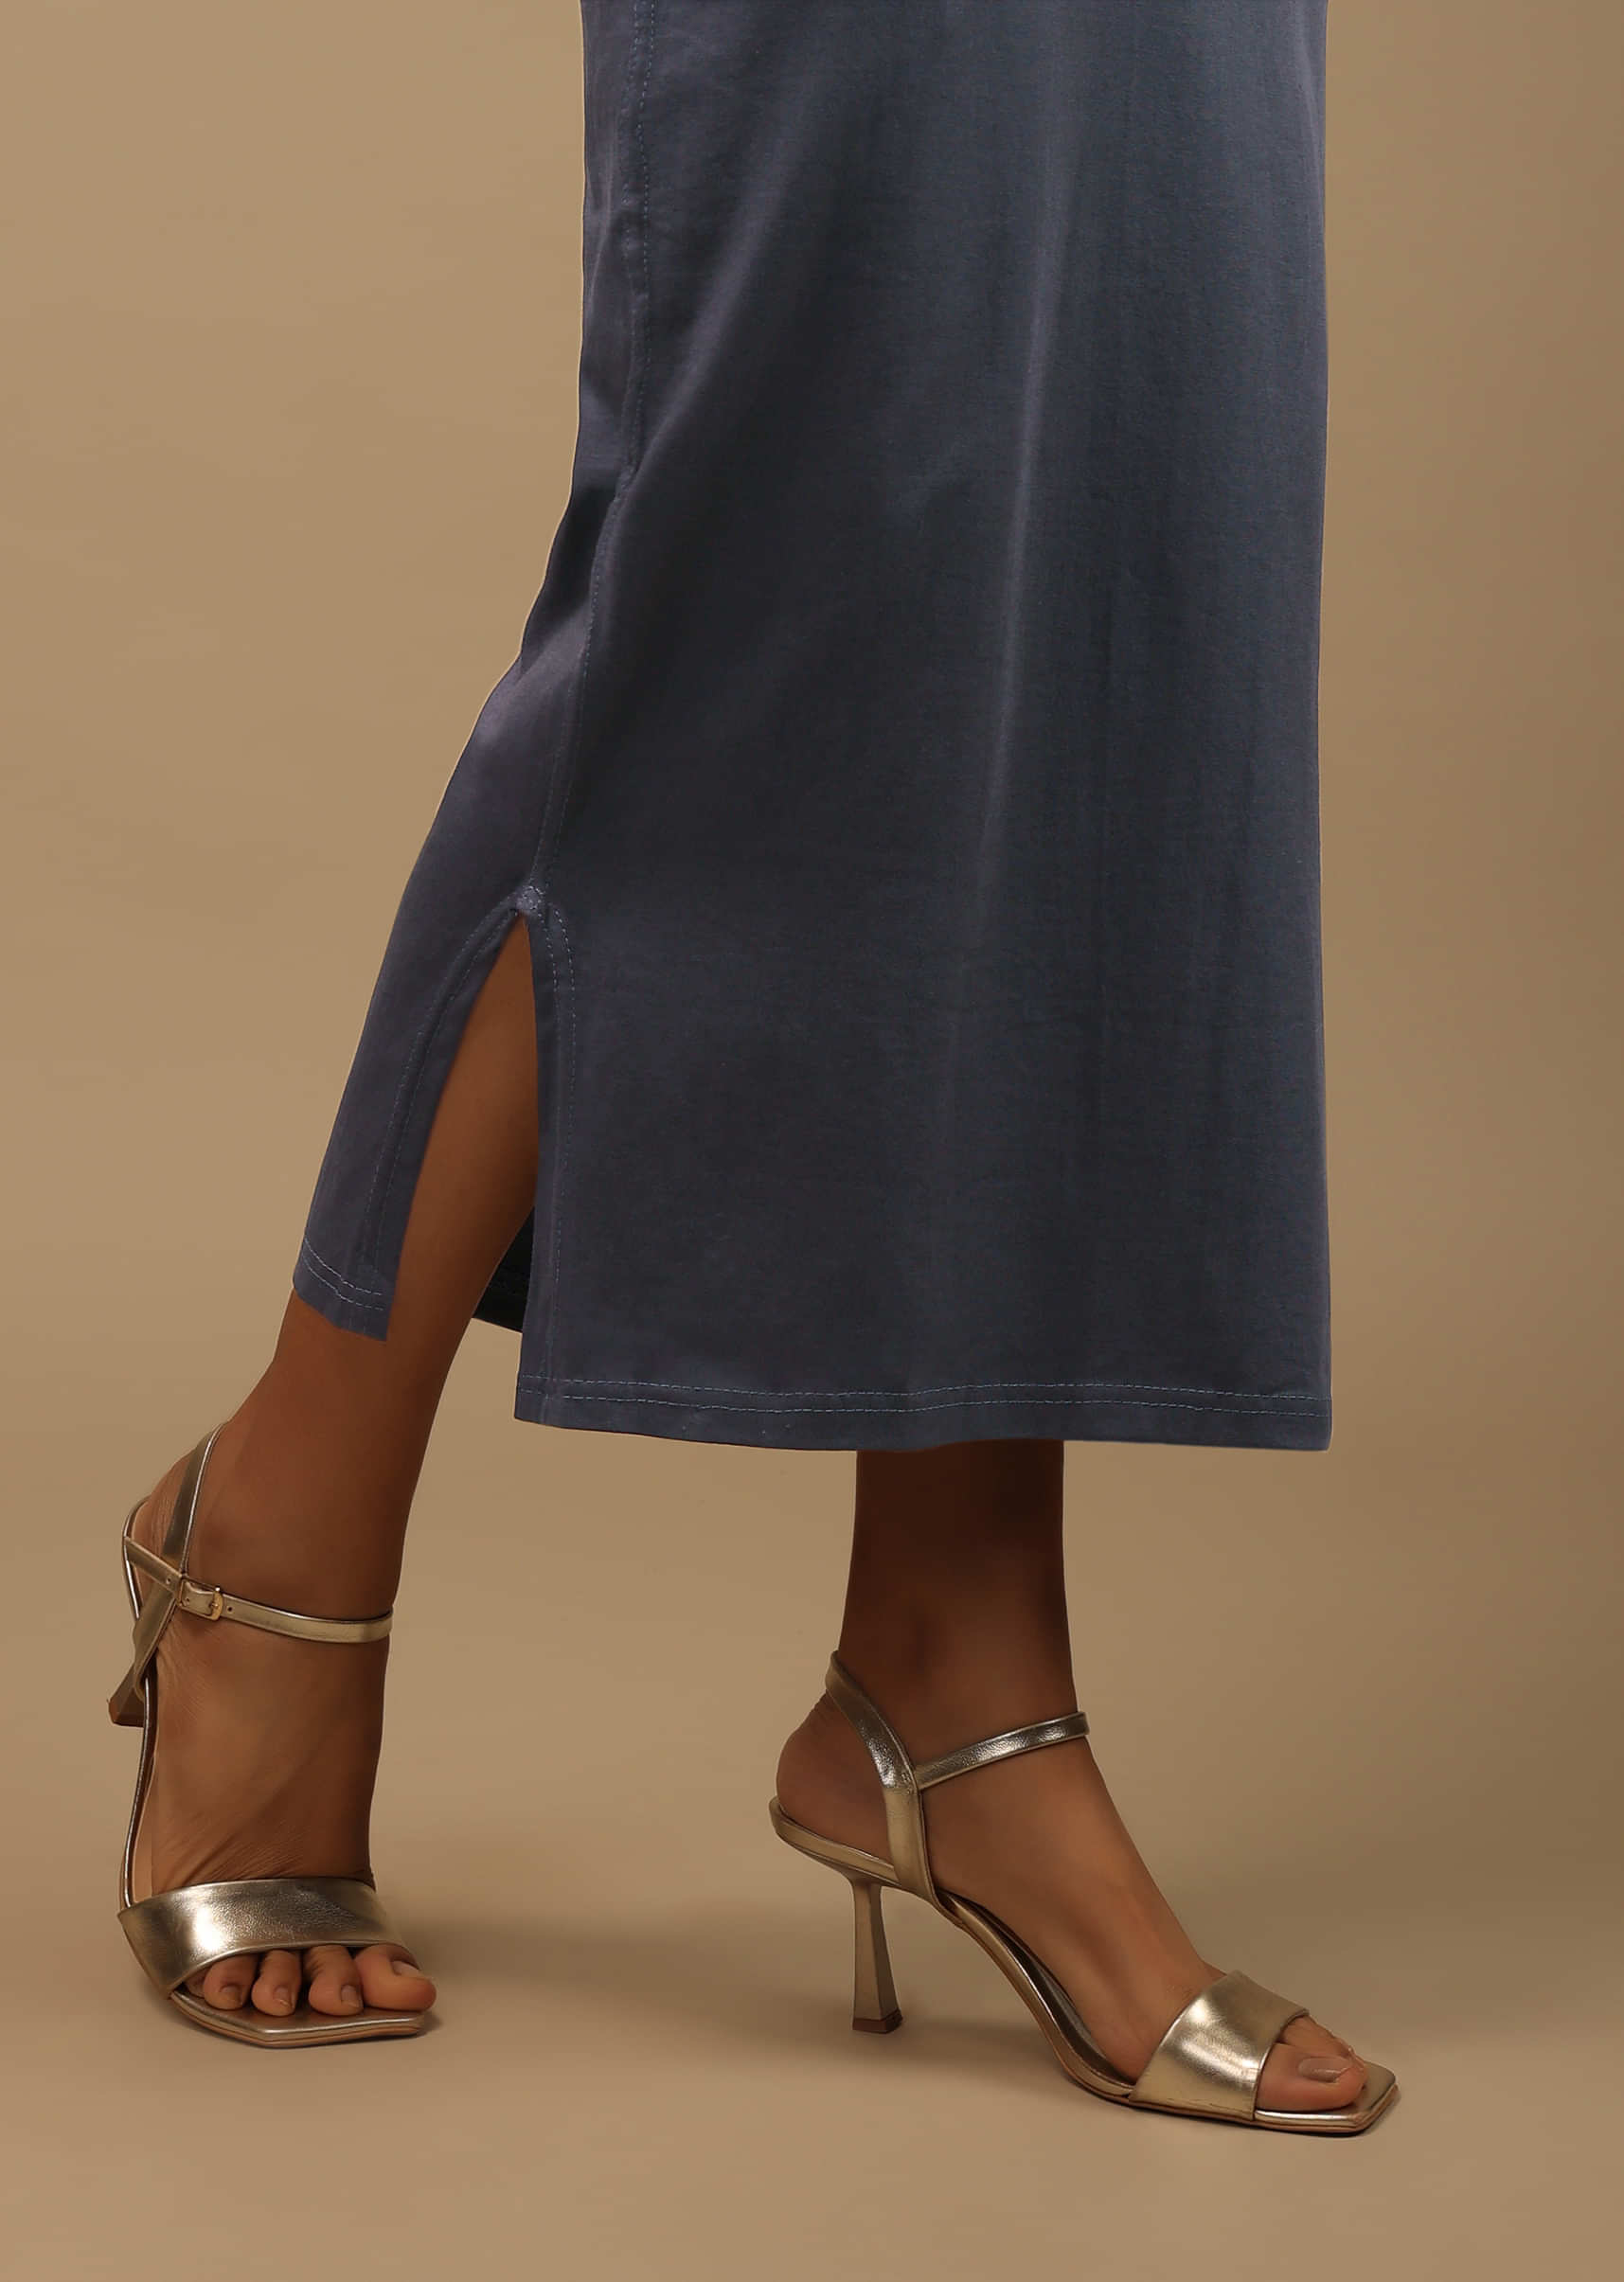 Buy BUYONN Women Grey Spandex Saree Shapewear (L) Online at Best